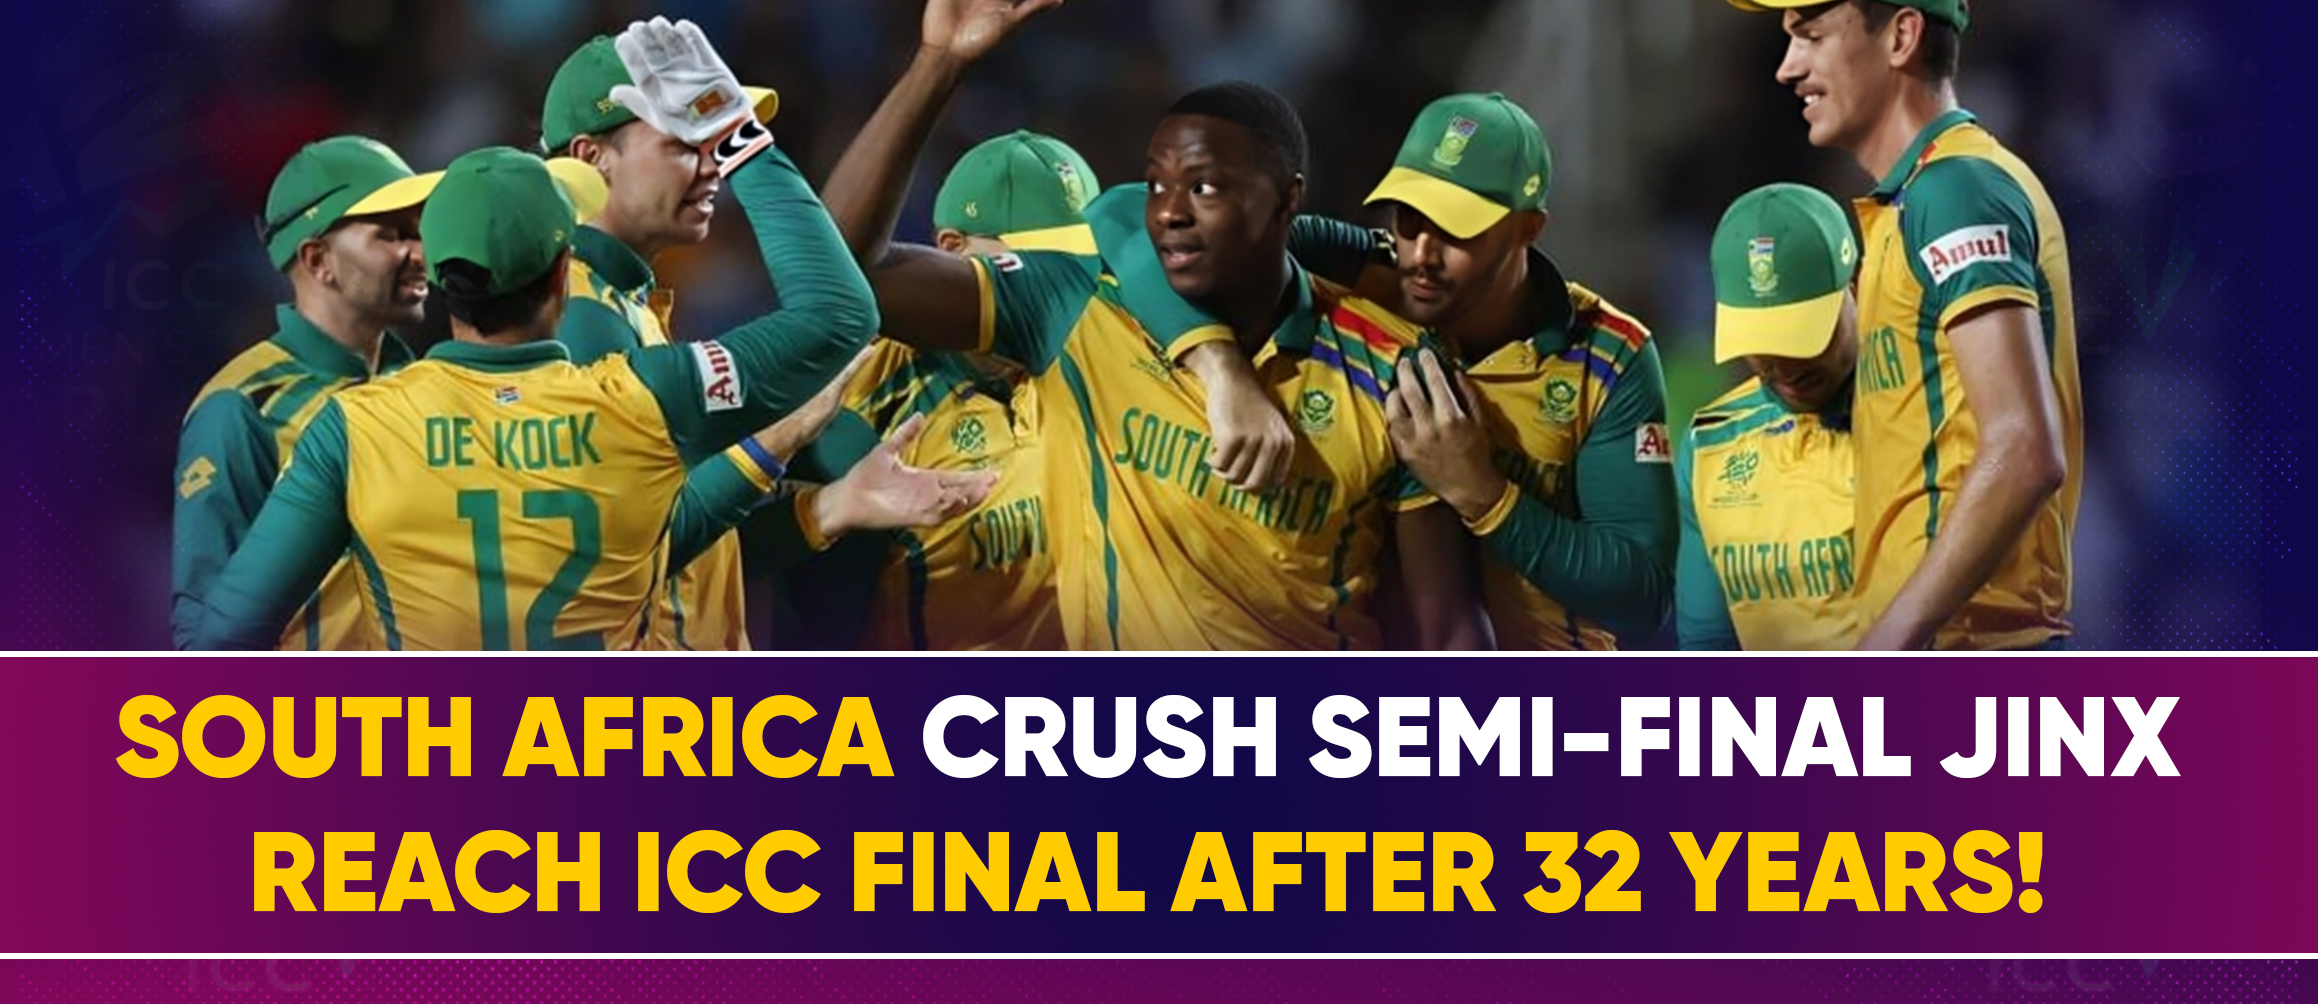 South Africa Crush Semi-Final Jinx, Reach ICC Final After 32 Years!